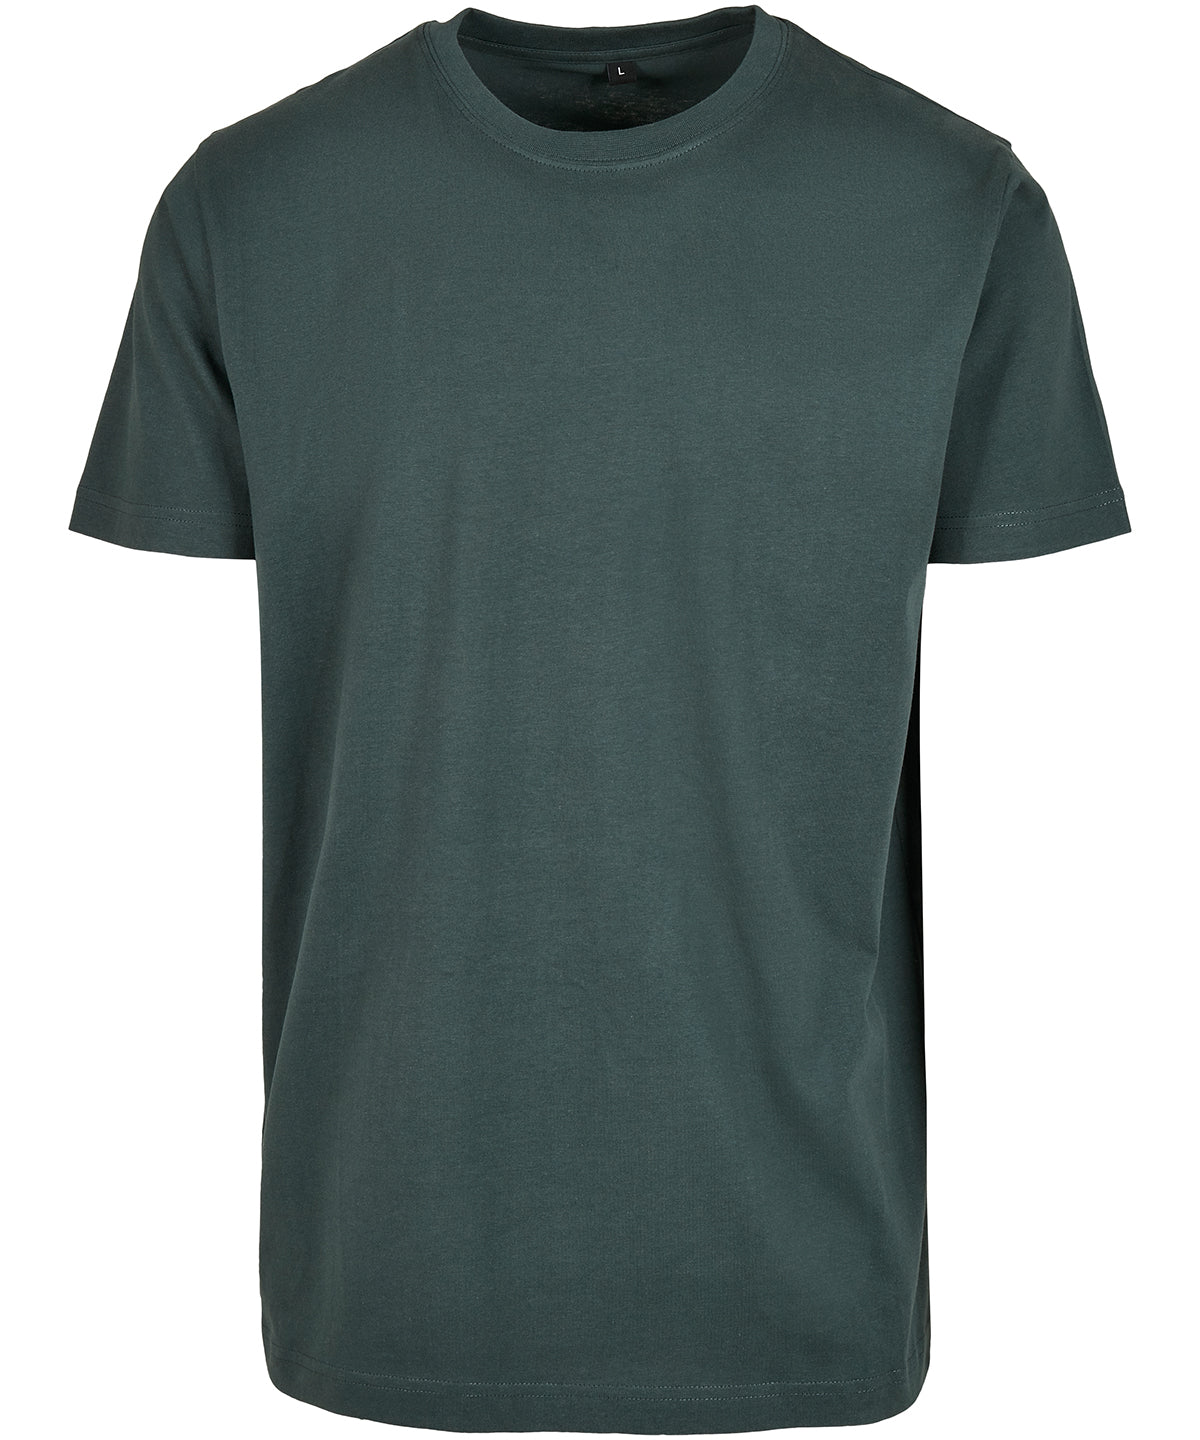 Personalised T-Shirts - Dark Brown Build Your Brand T-shirt round-neck